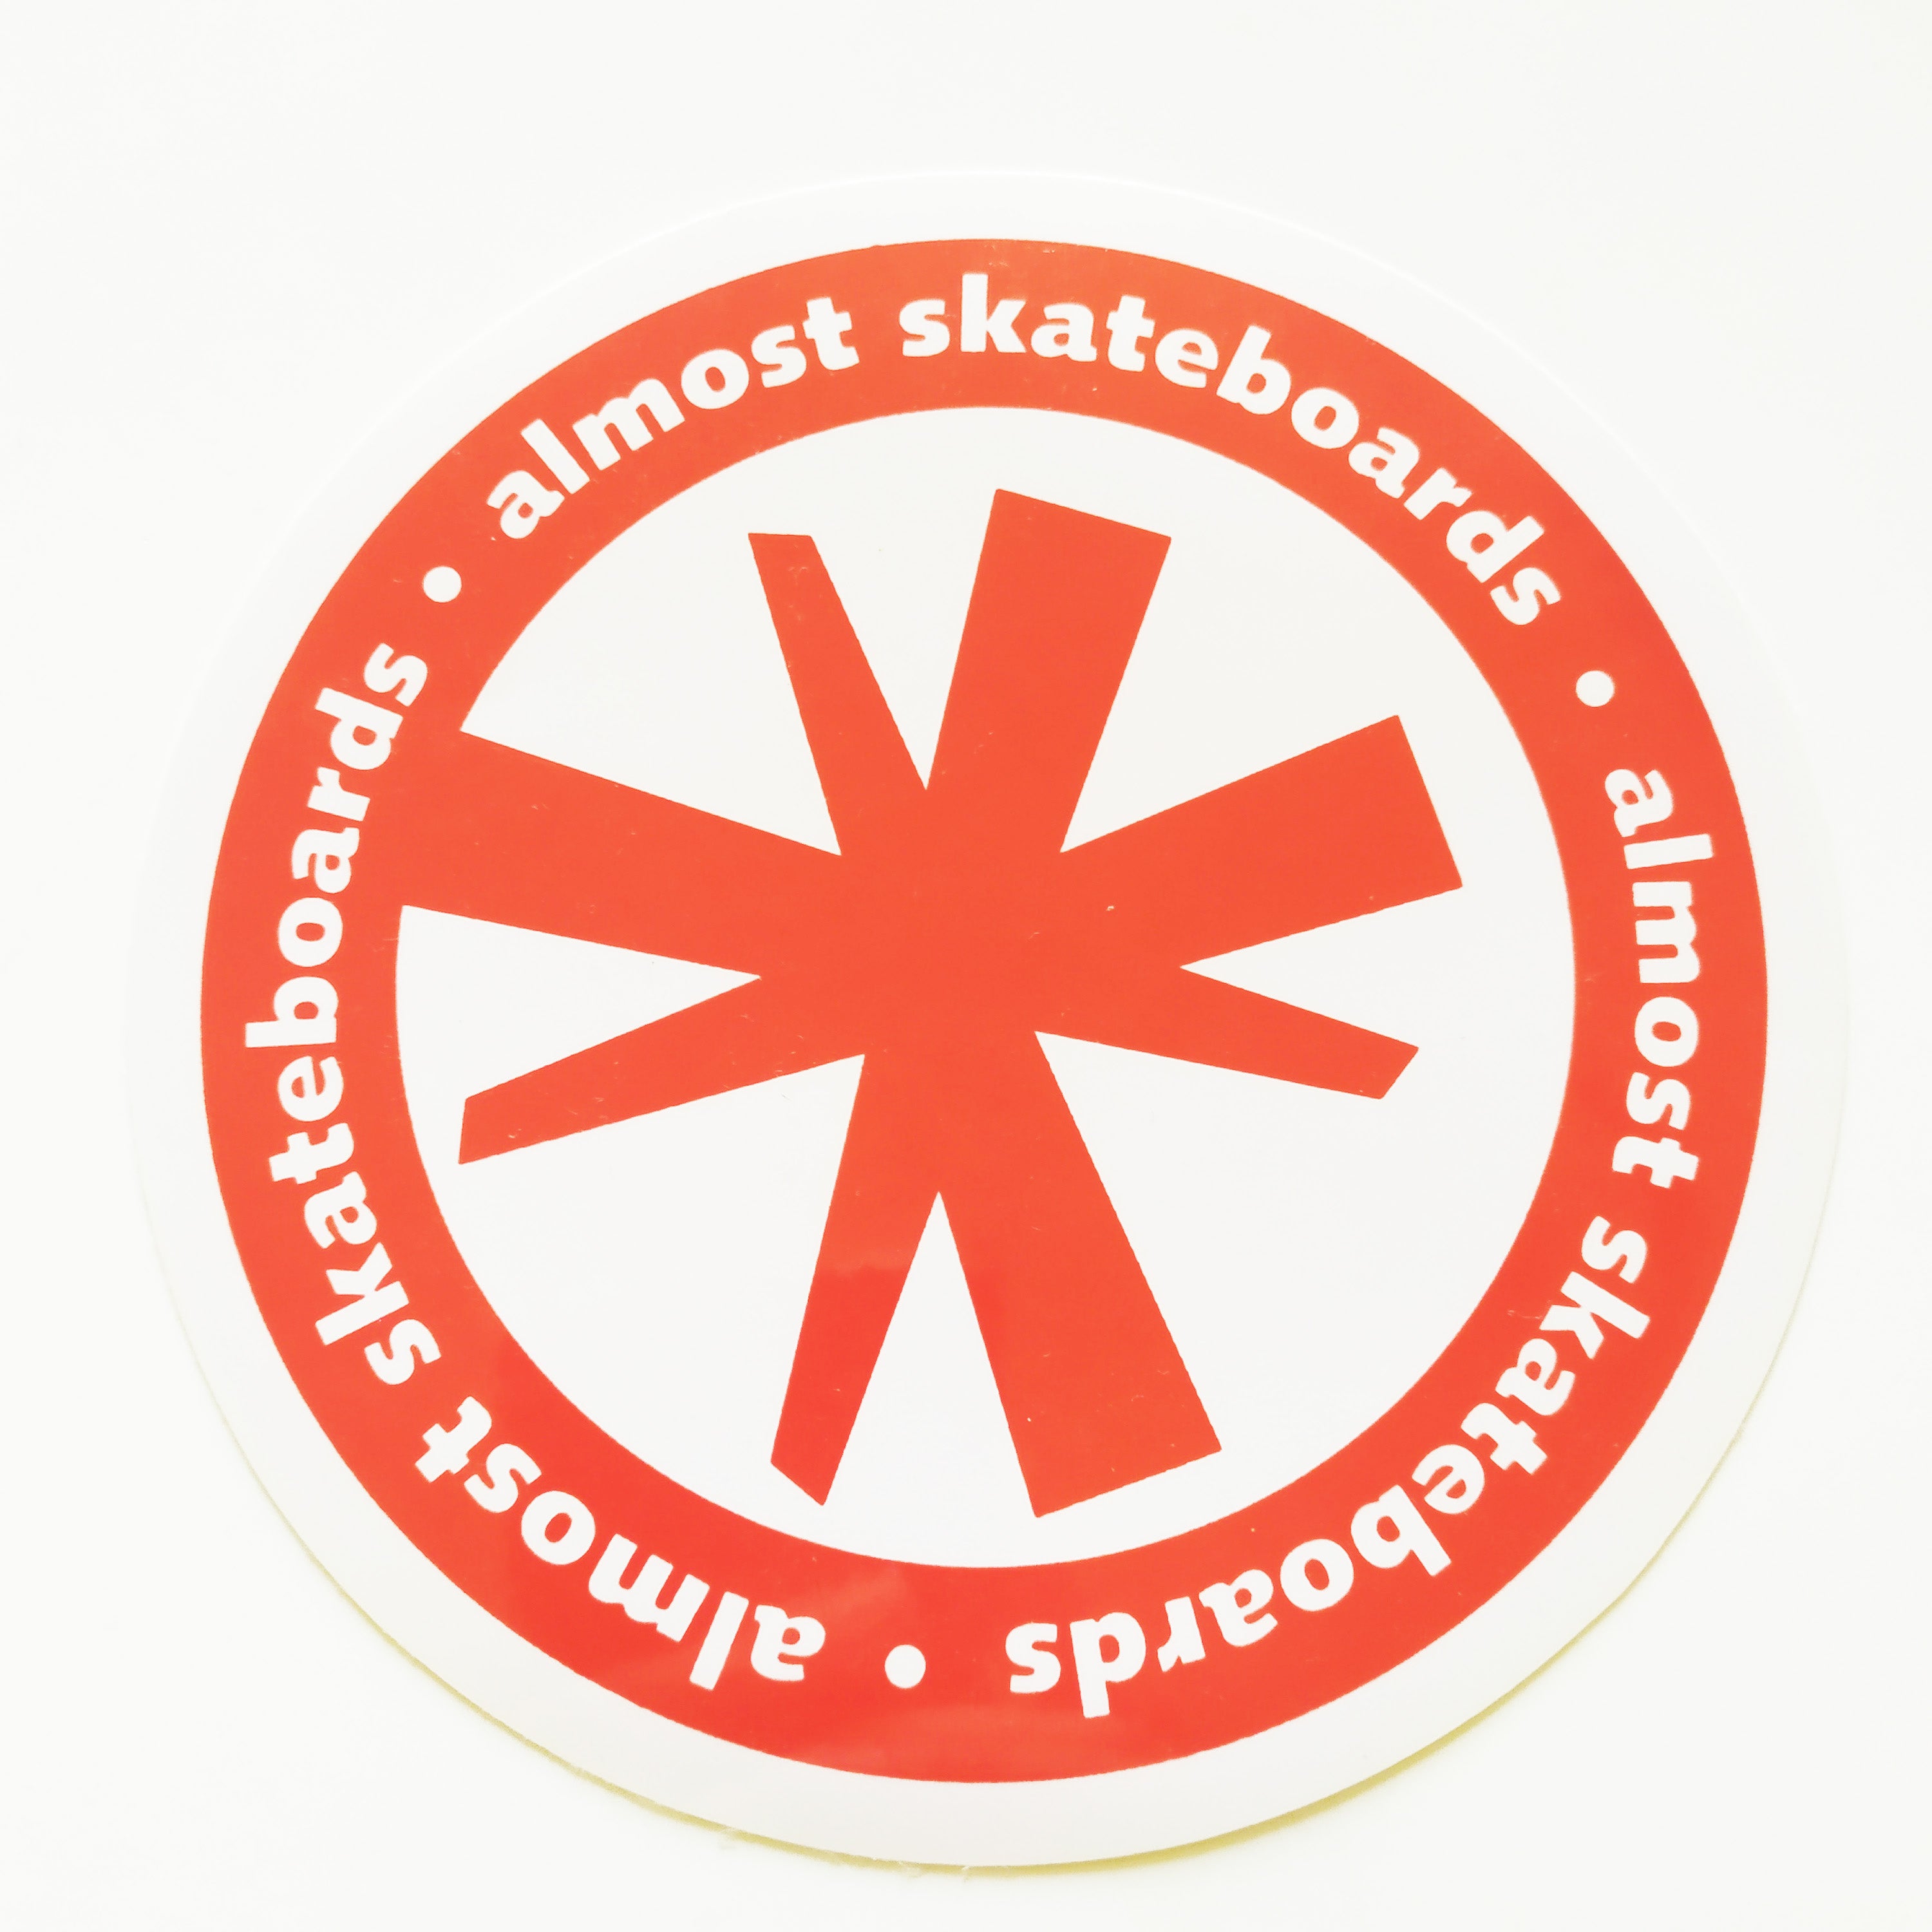 Almost Skateboard Sticker - Red Logo - 14cm across approx - SkateboardStickers.com